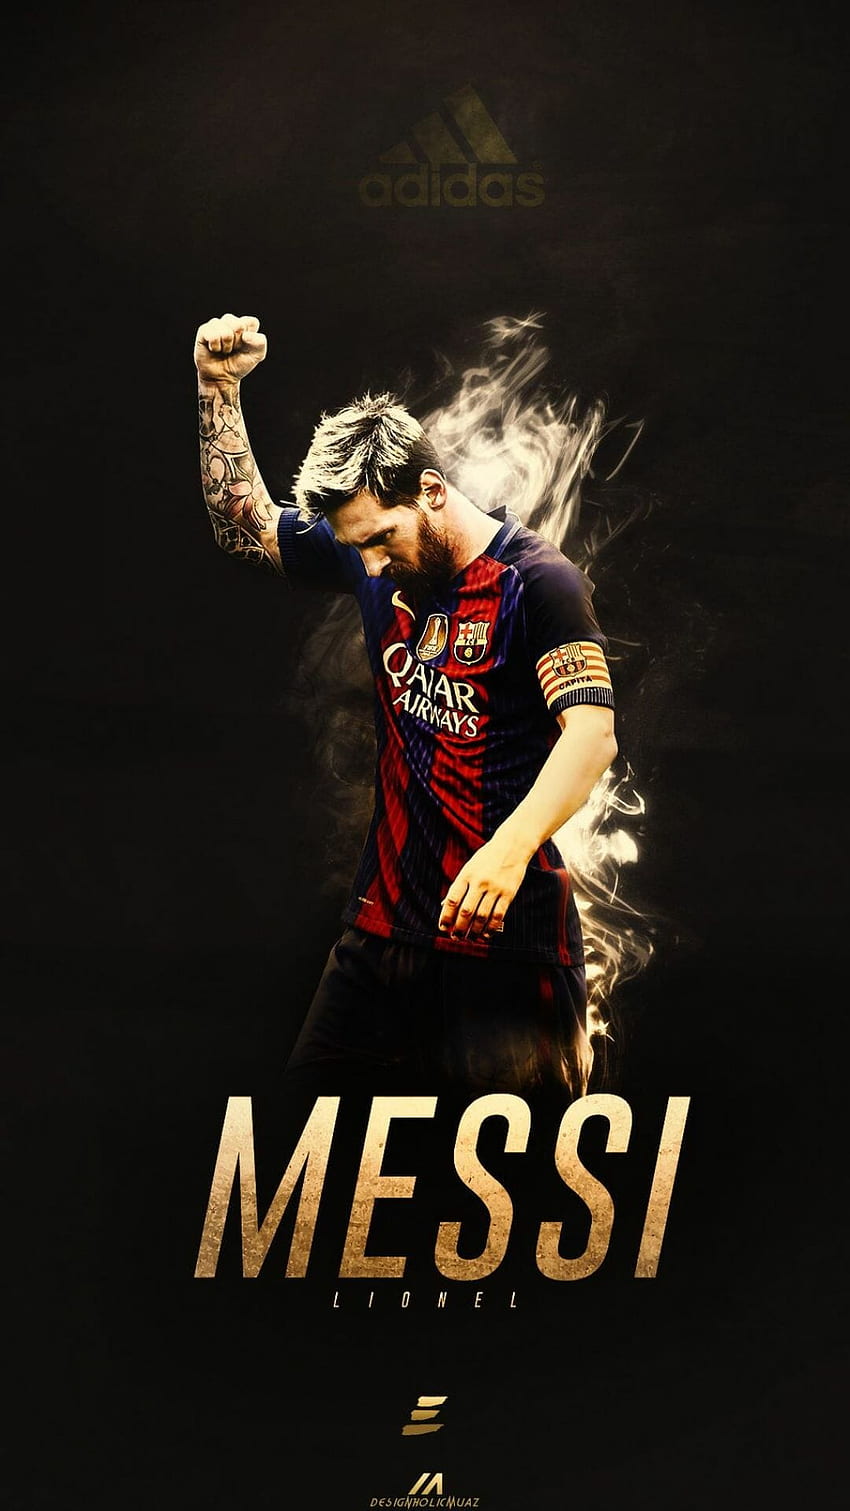 80 Messi - Android, iPhone, Plano de fundo / (, ) (2022), Leo Messi Papel de parede de celular HD